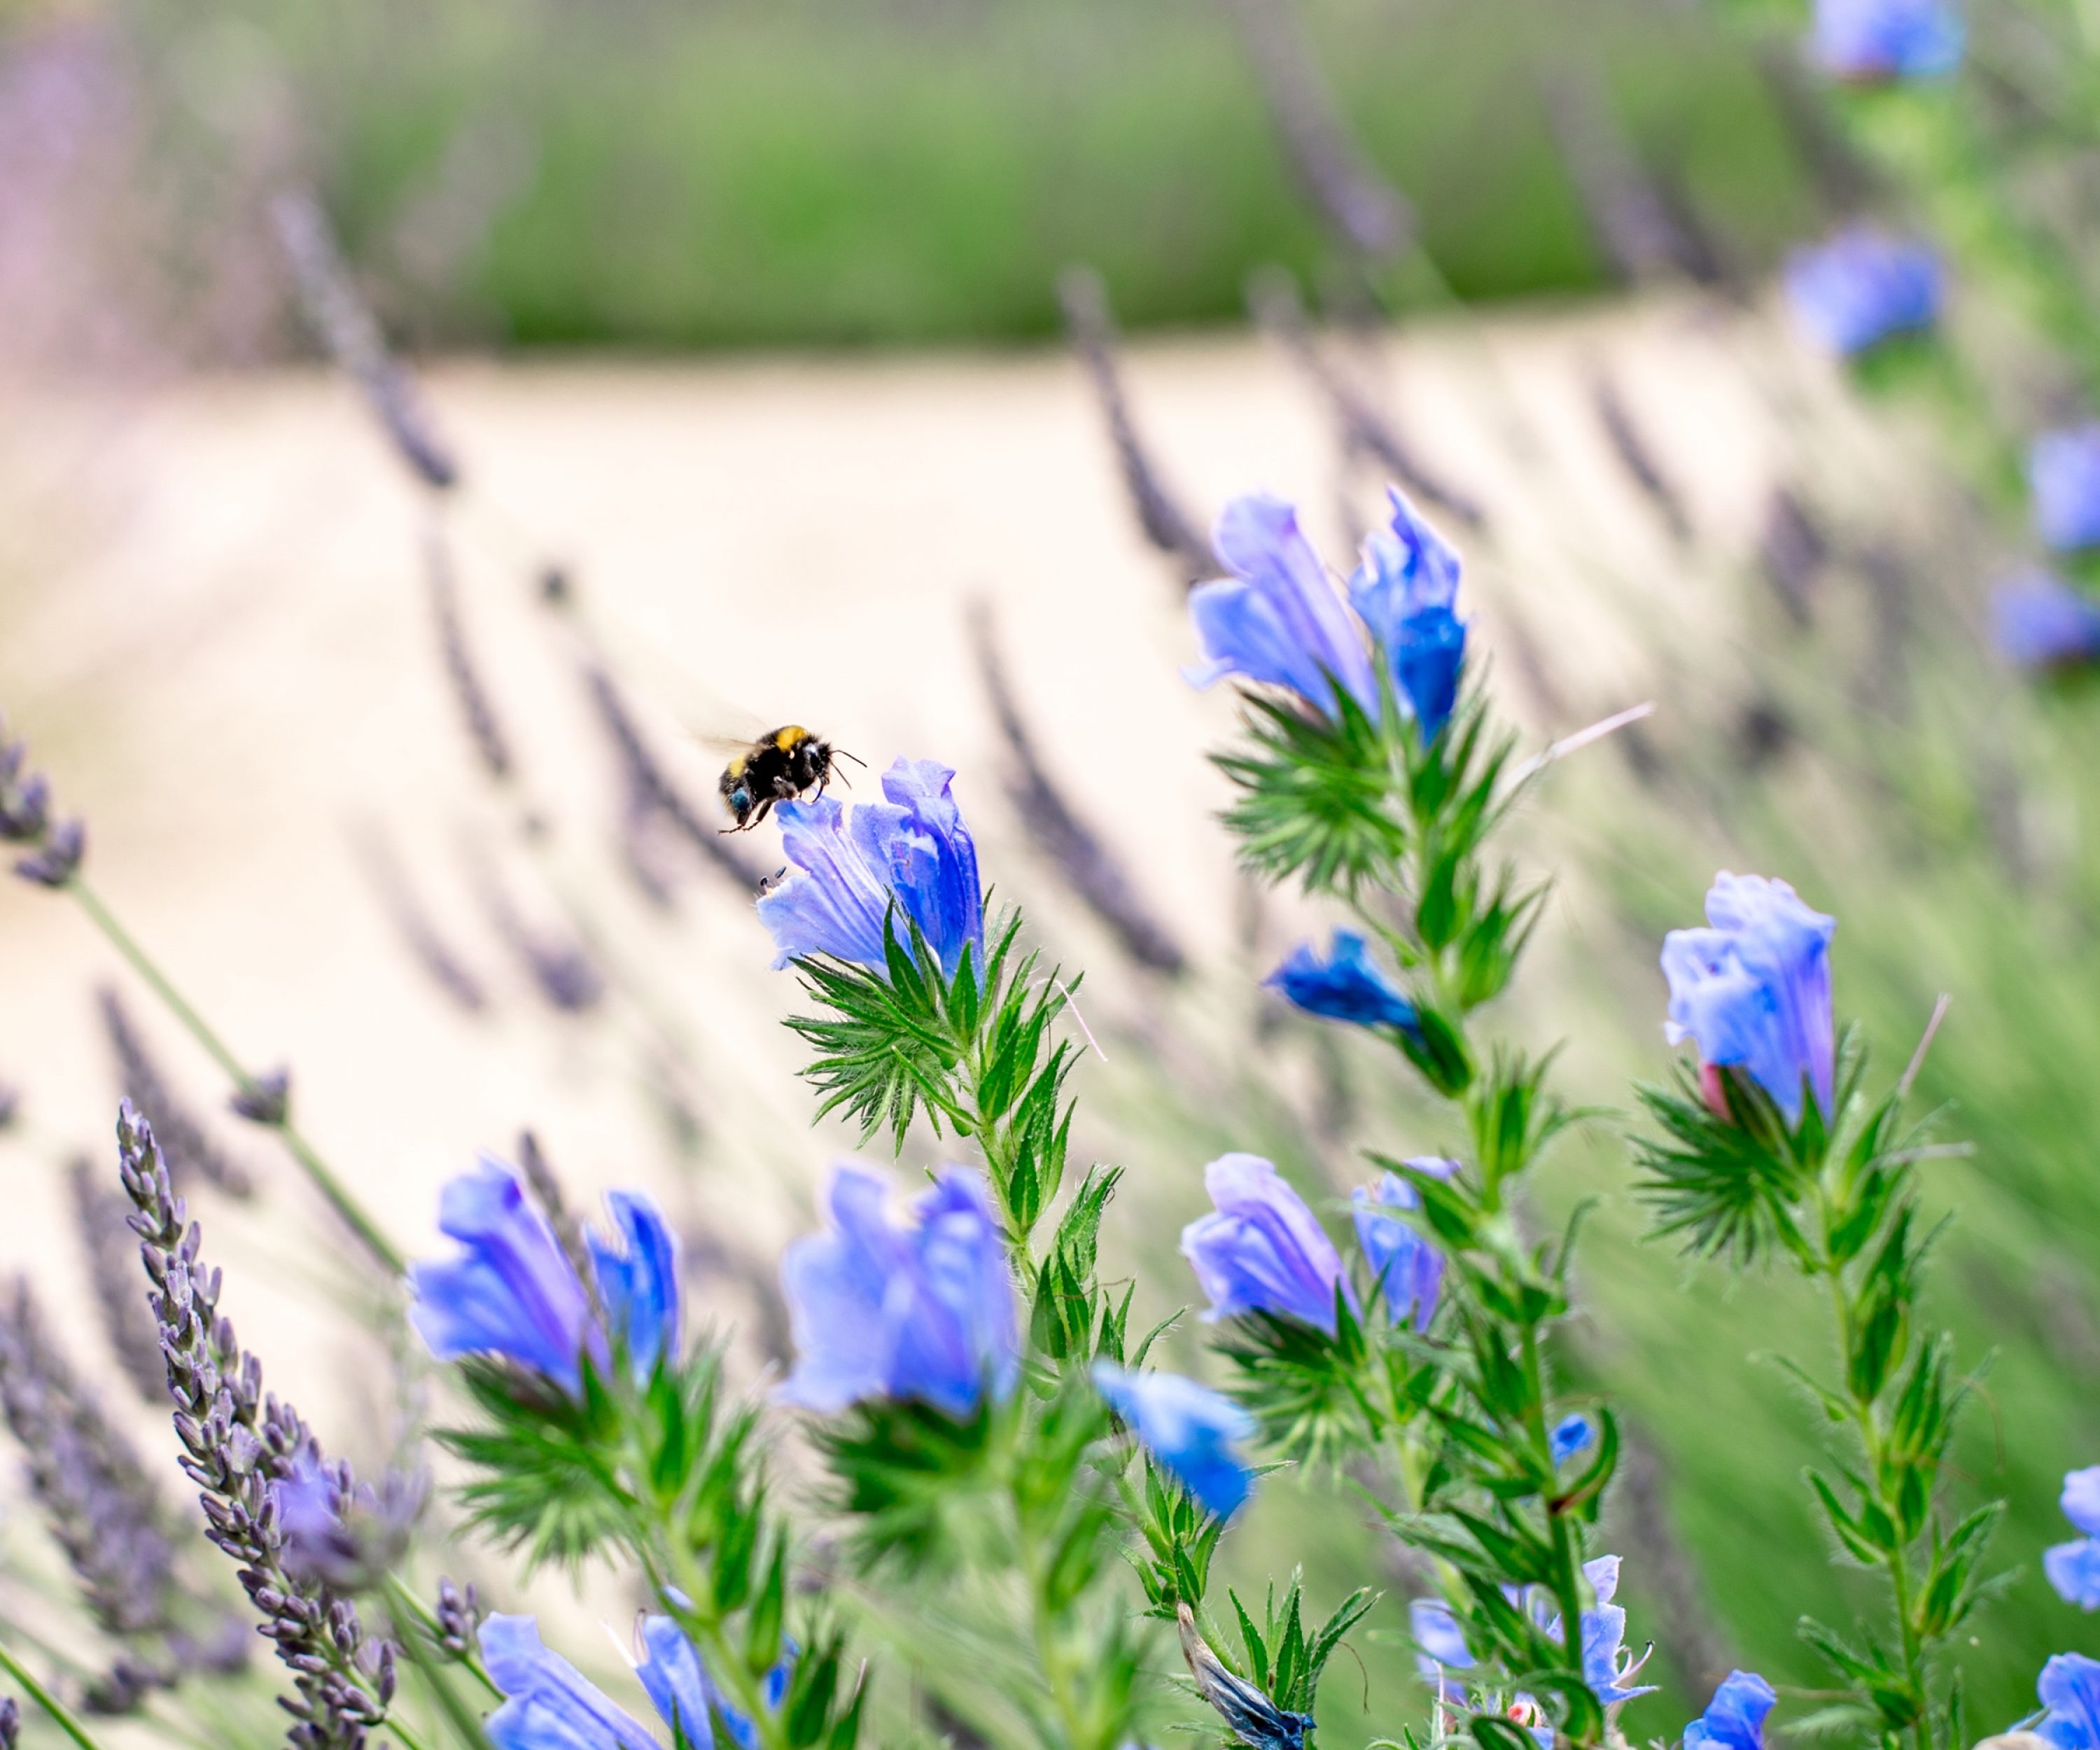 Bumblebee on a blue flower in a wild garden.